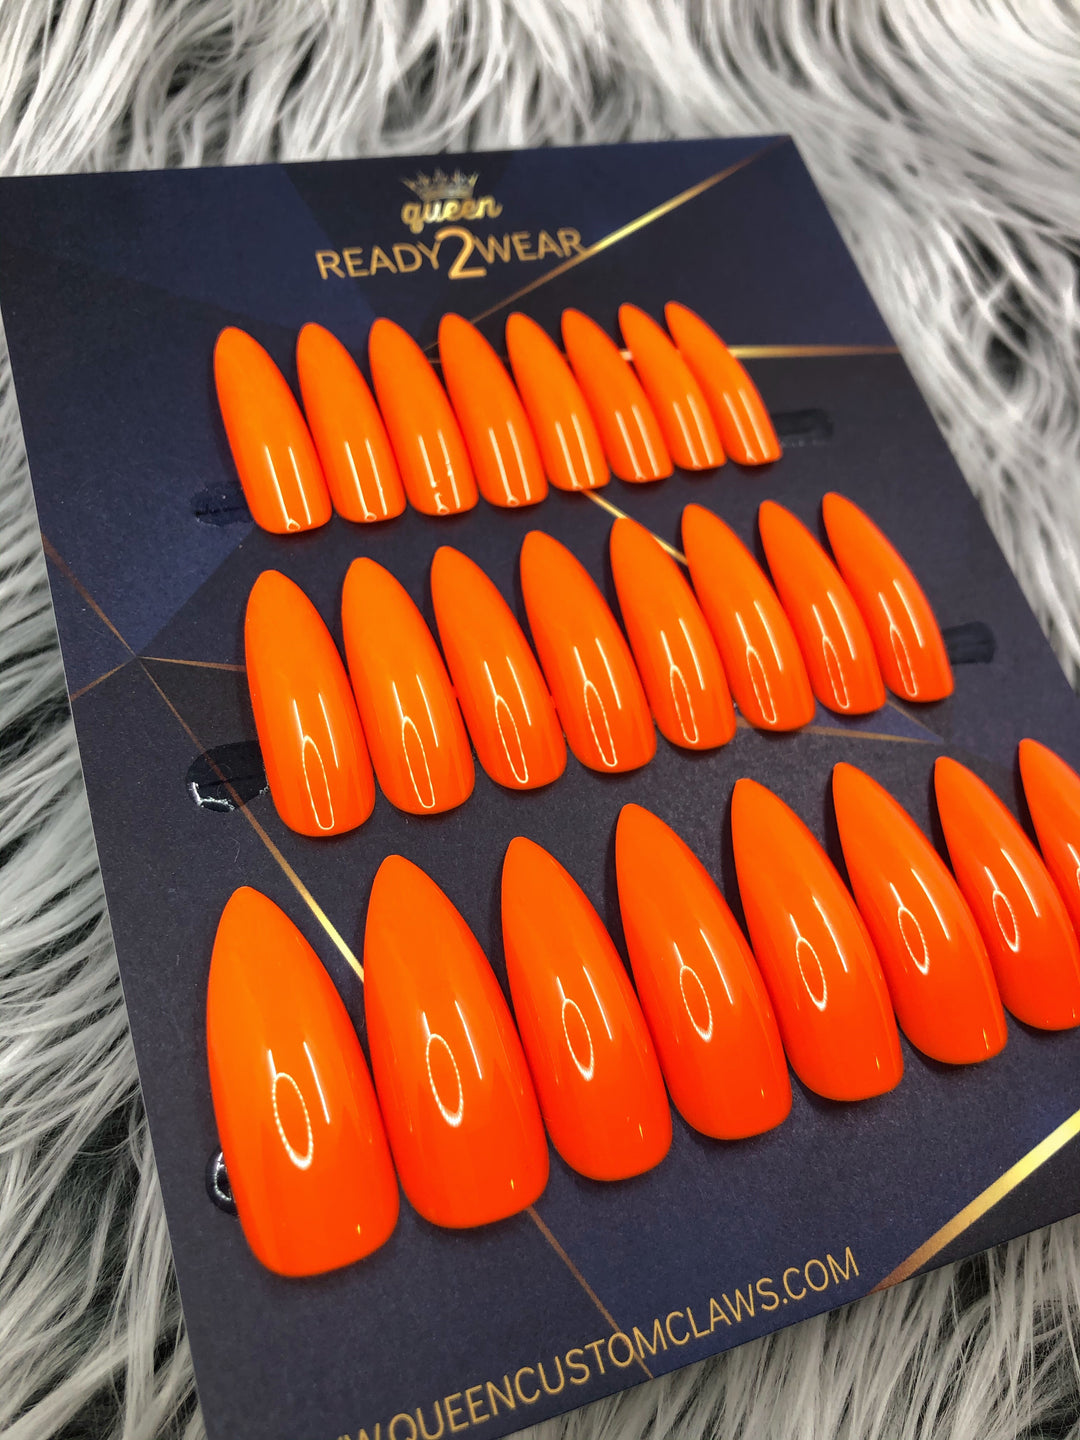 Orange Glitter Stiletto False Nails Jelly Neon Medium Press On